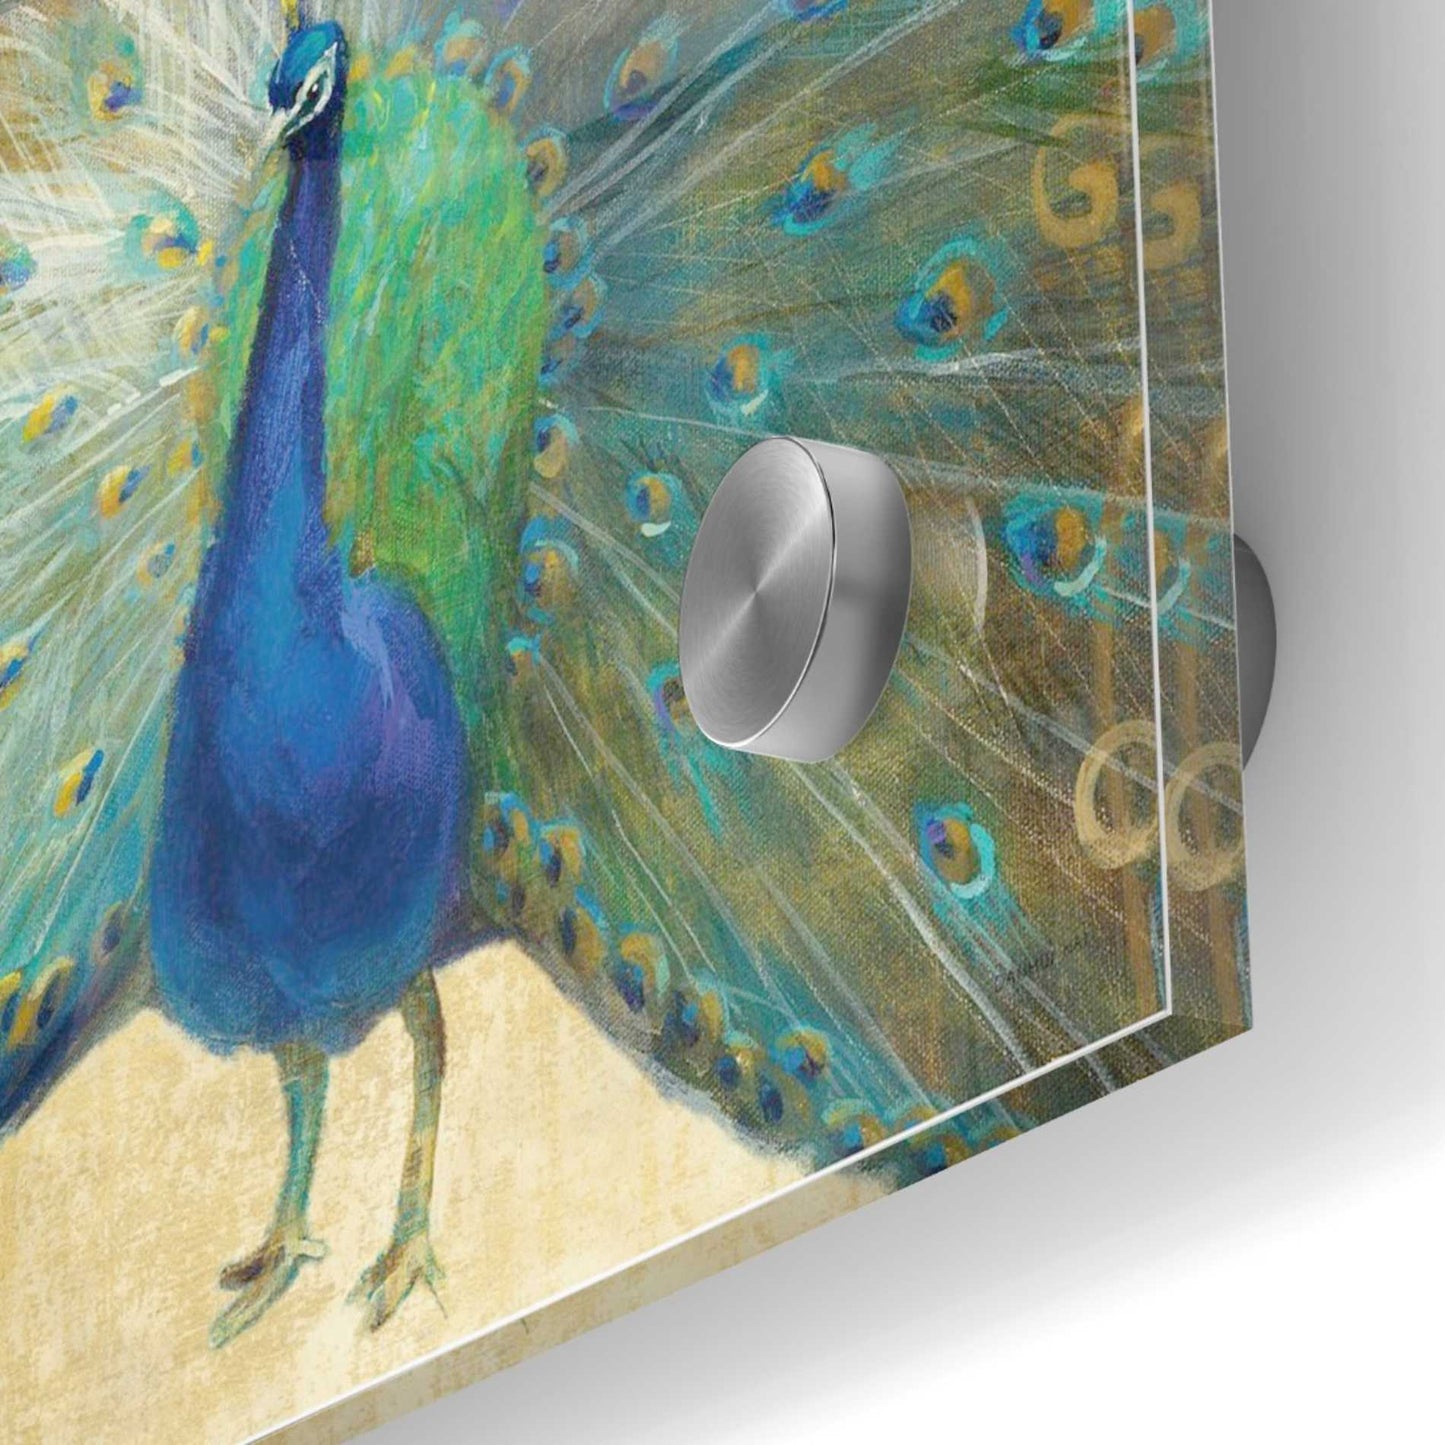 Epic Art 'Blue Peacock' by Danhui Nai, Acrylic Glass Wall Art,24x24